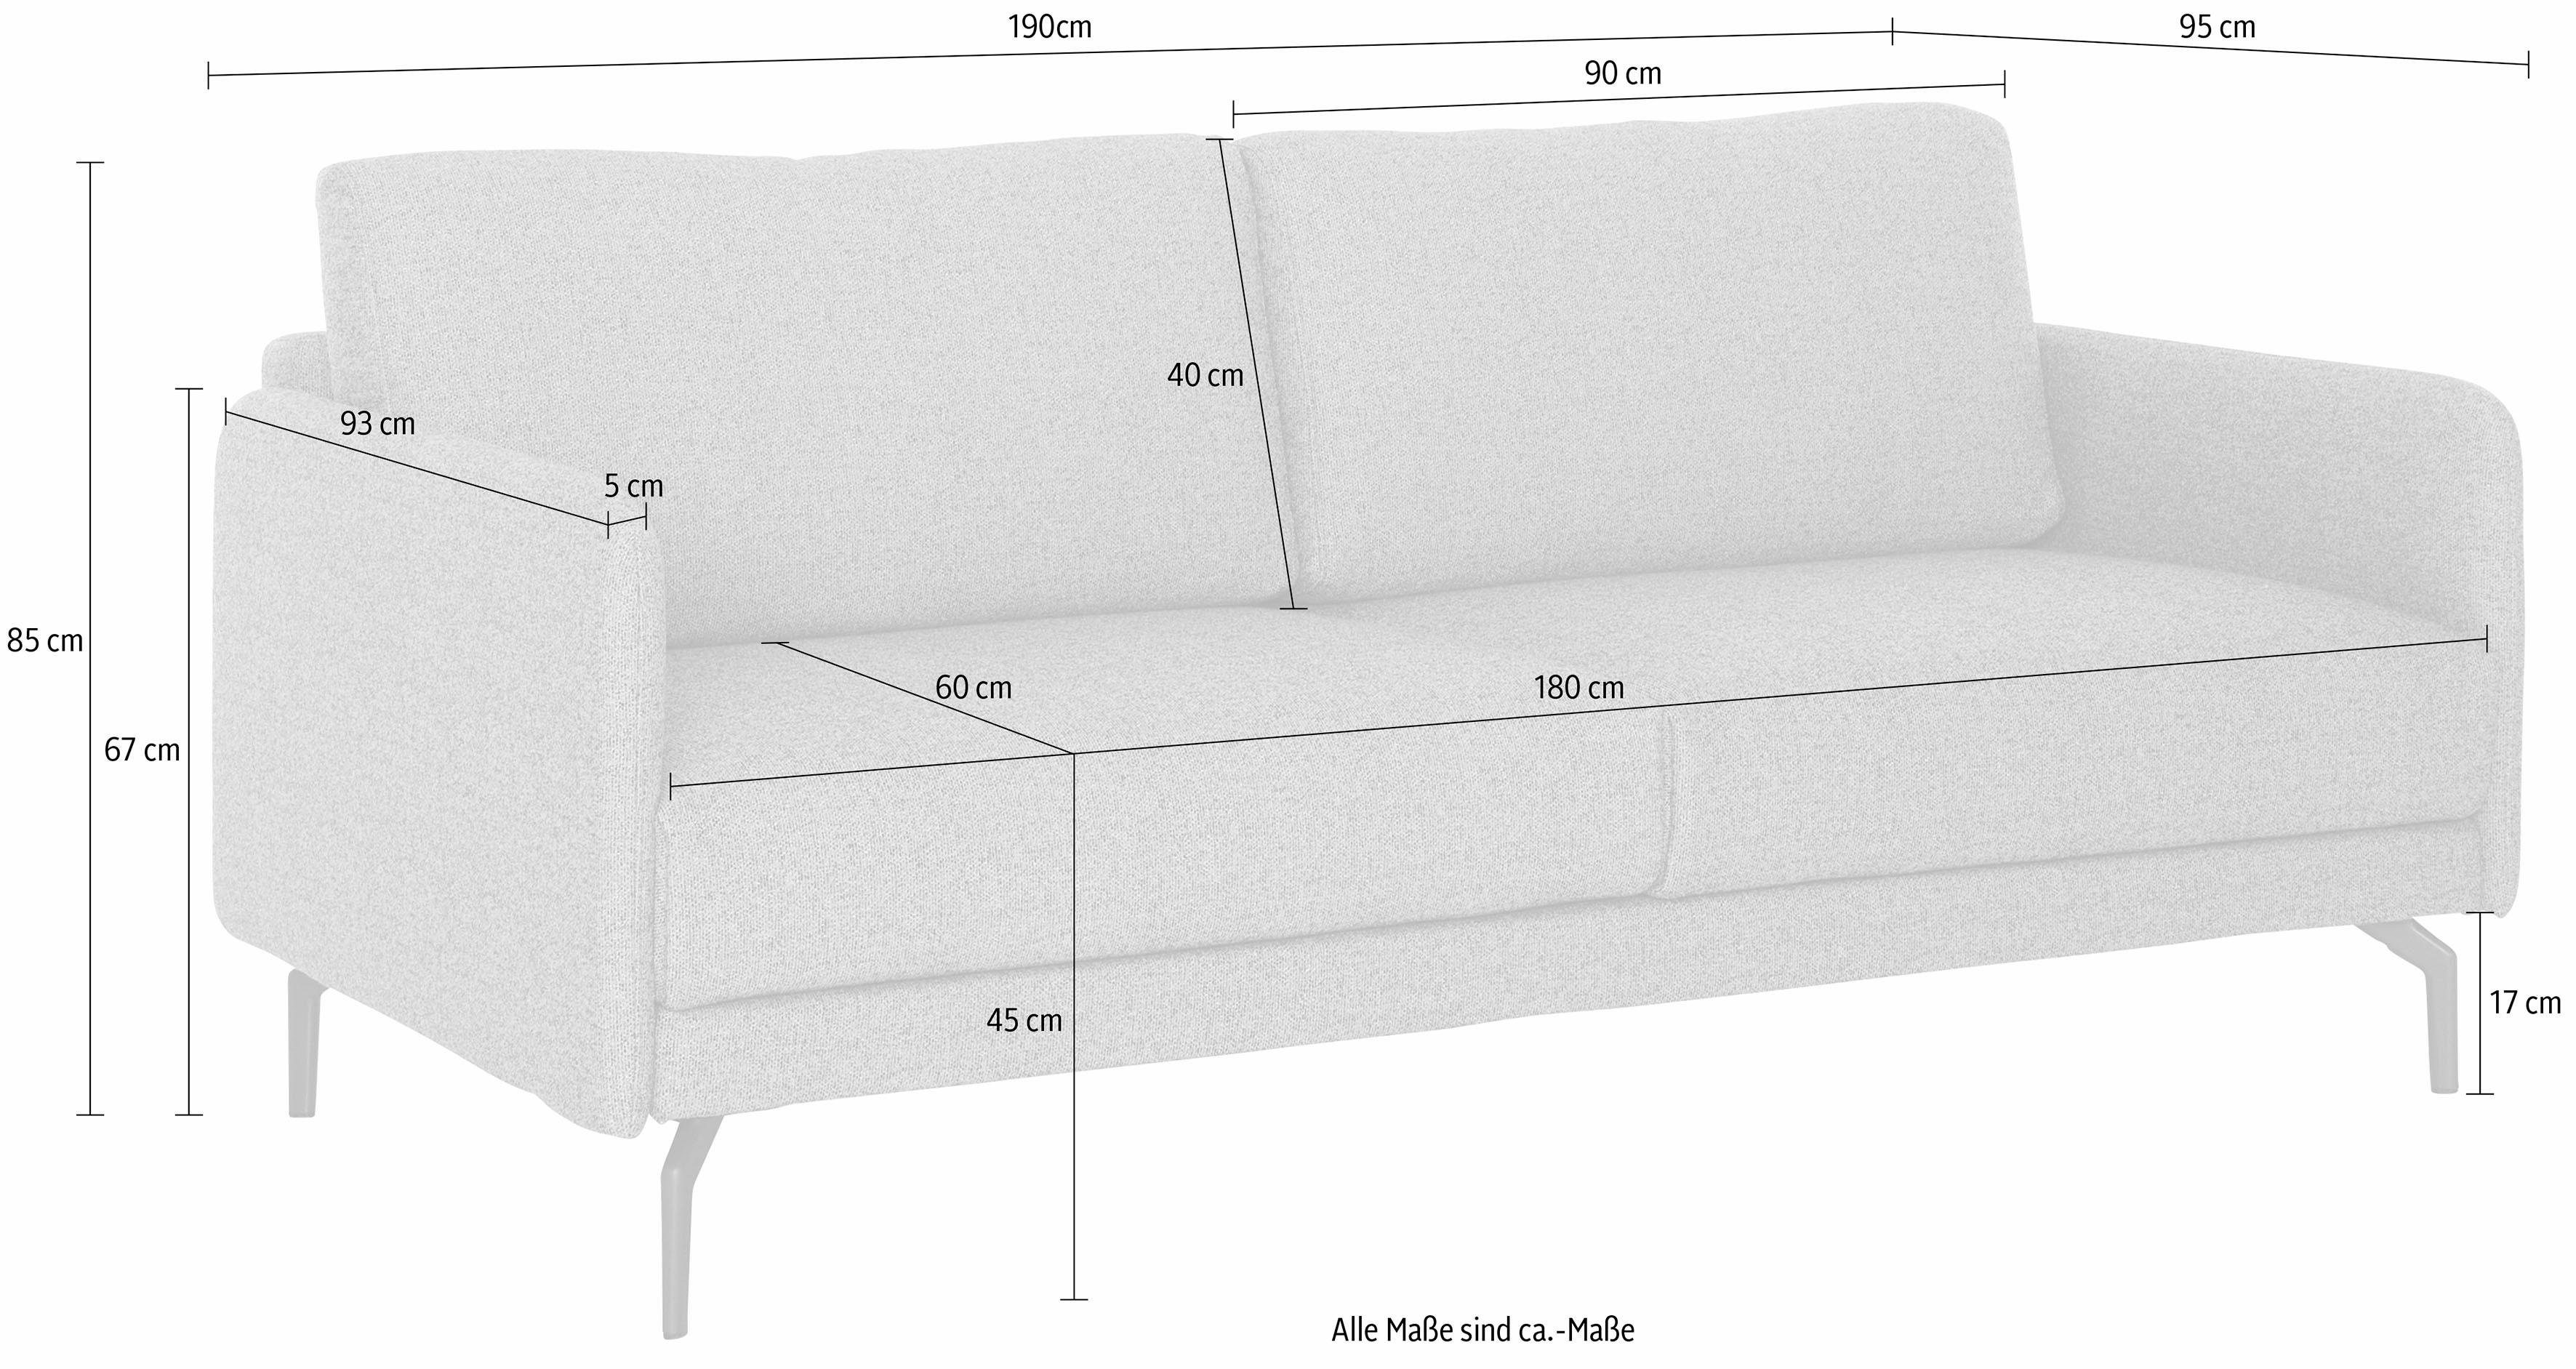 Umbragrau schmal, Armlehne Alugussfuß sehr 190 cm, Breite hs.450, hülsta 3-Sitzer sofa